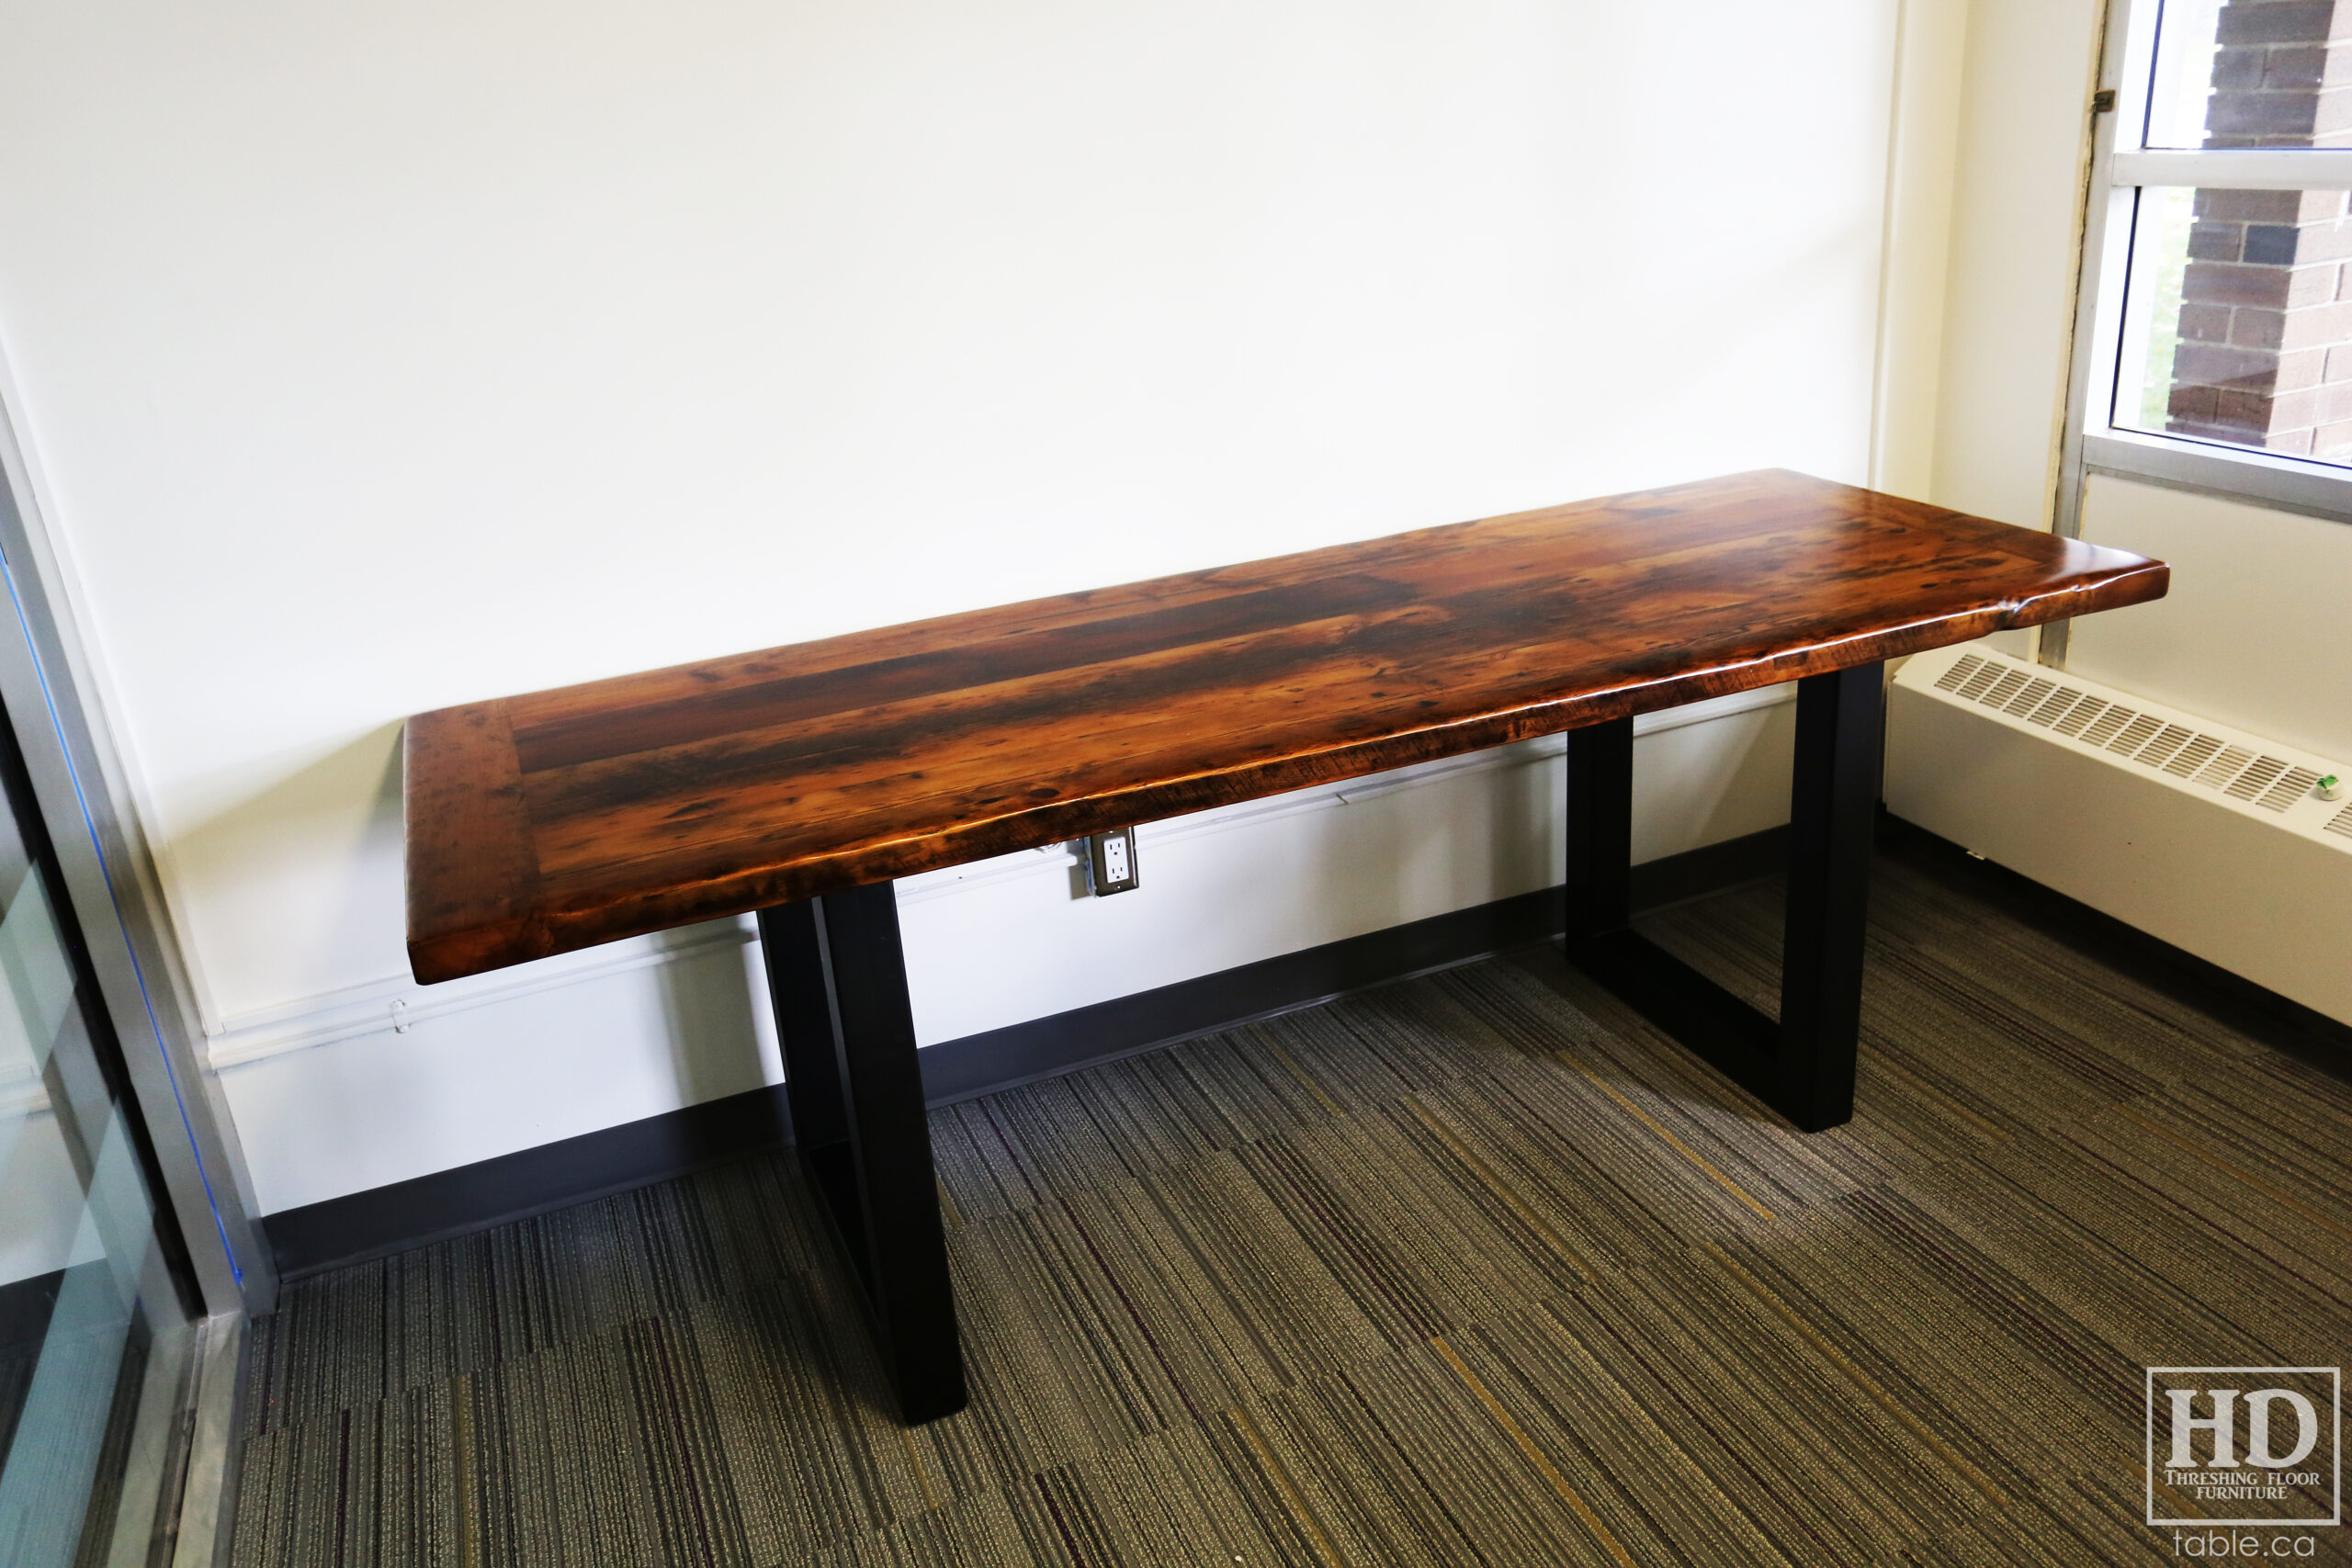 Reclaimed Wood Desk with Metal Base by HD Threshing Floor Furniture / www.table.ca